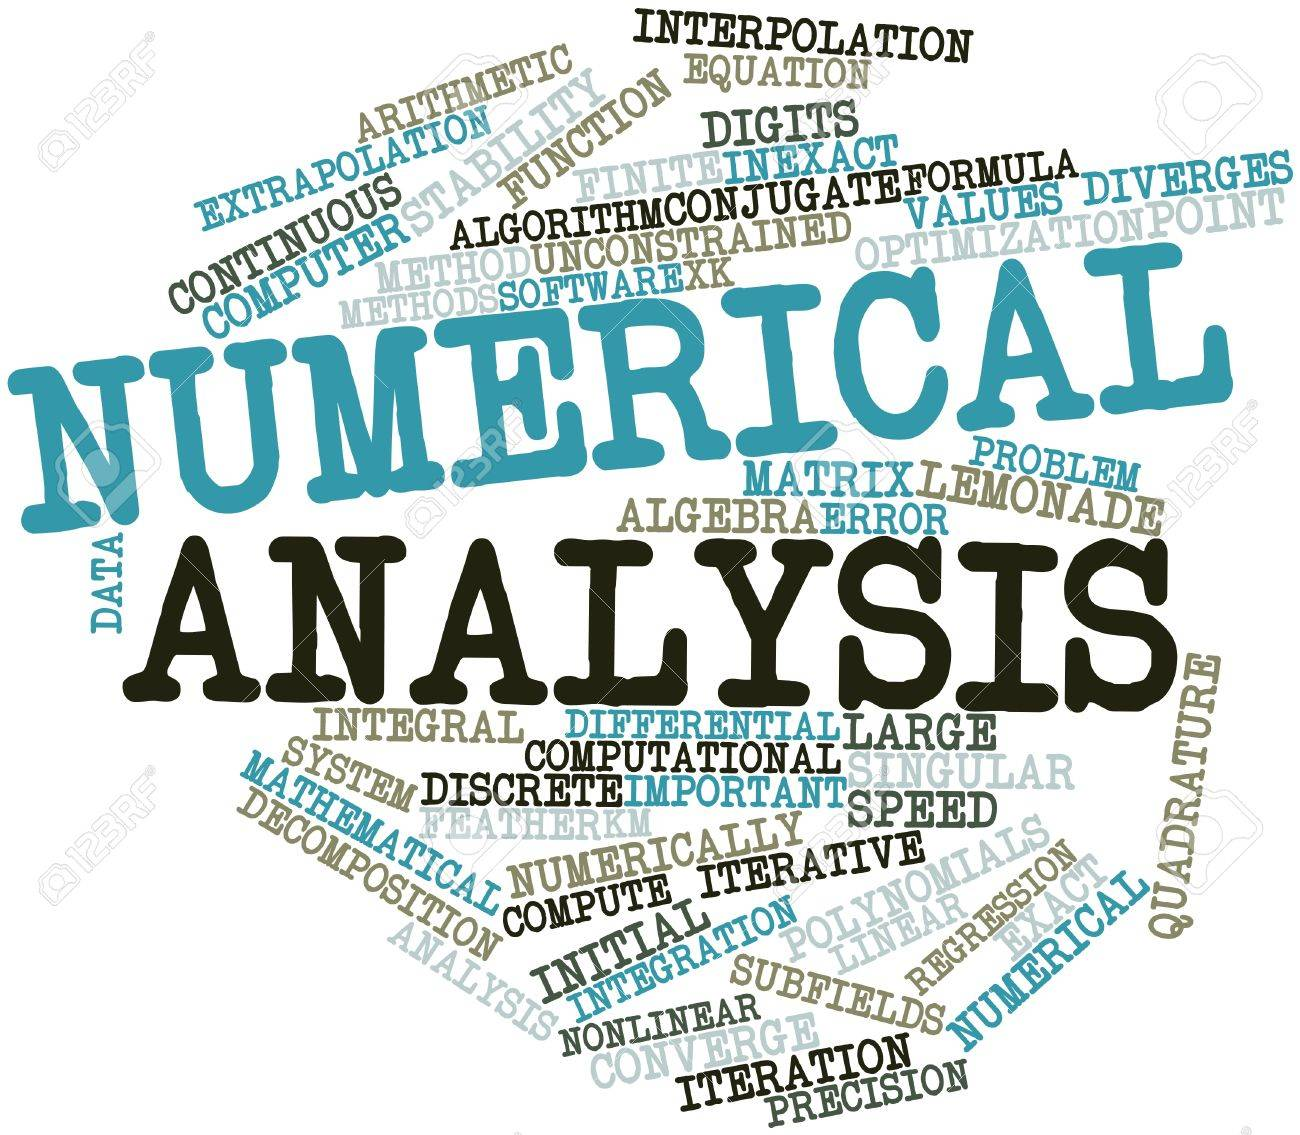 MA214 - Numerical Analysis